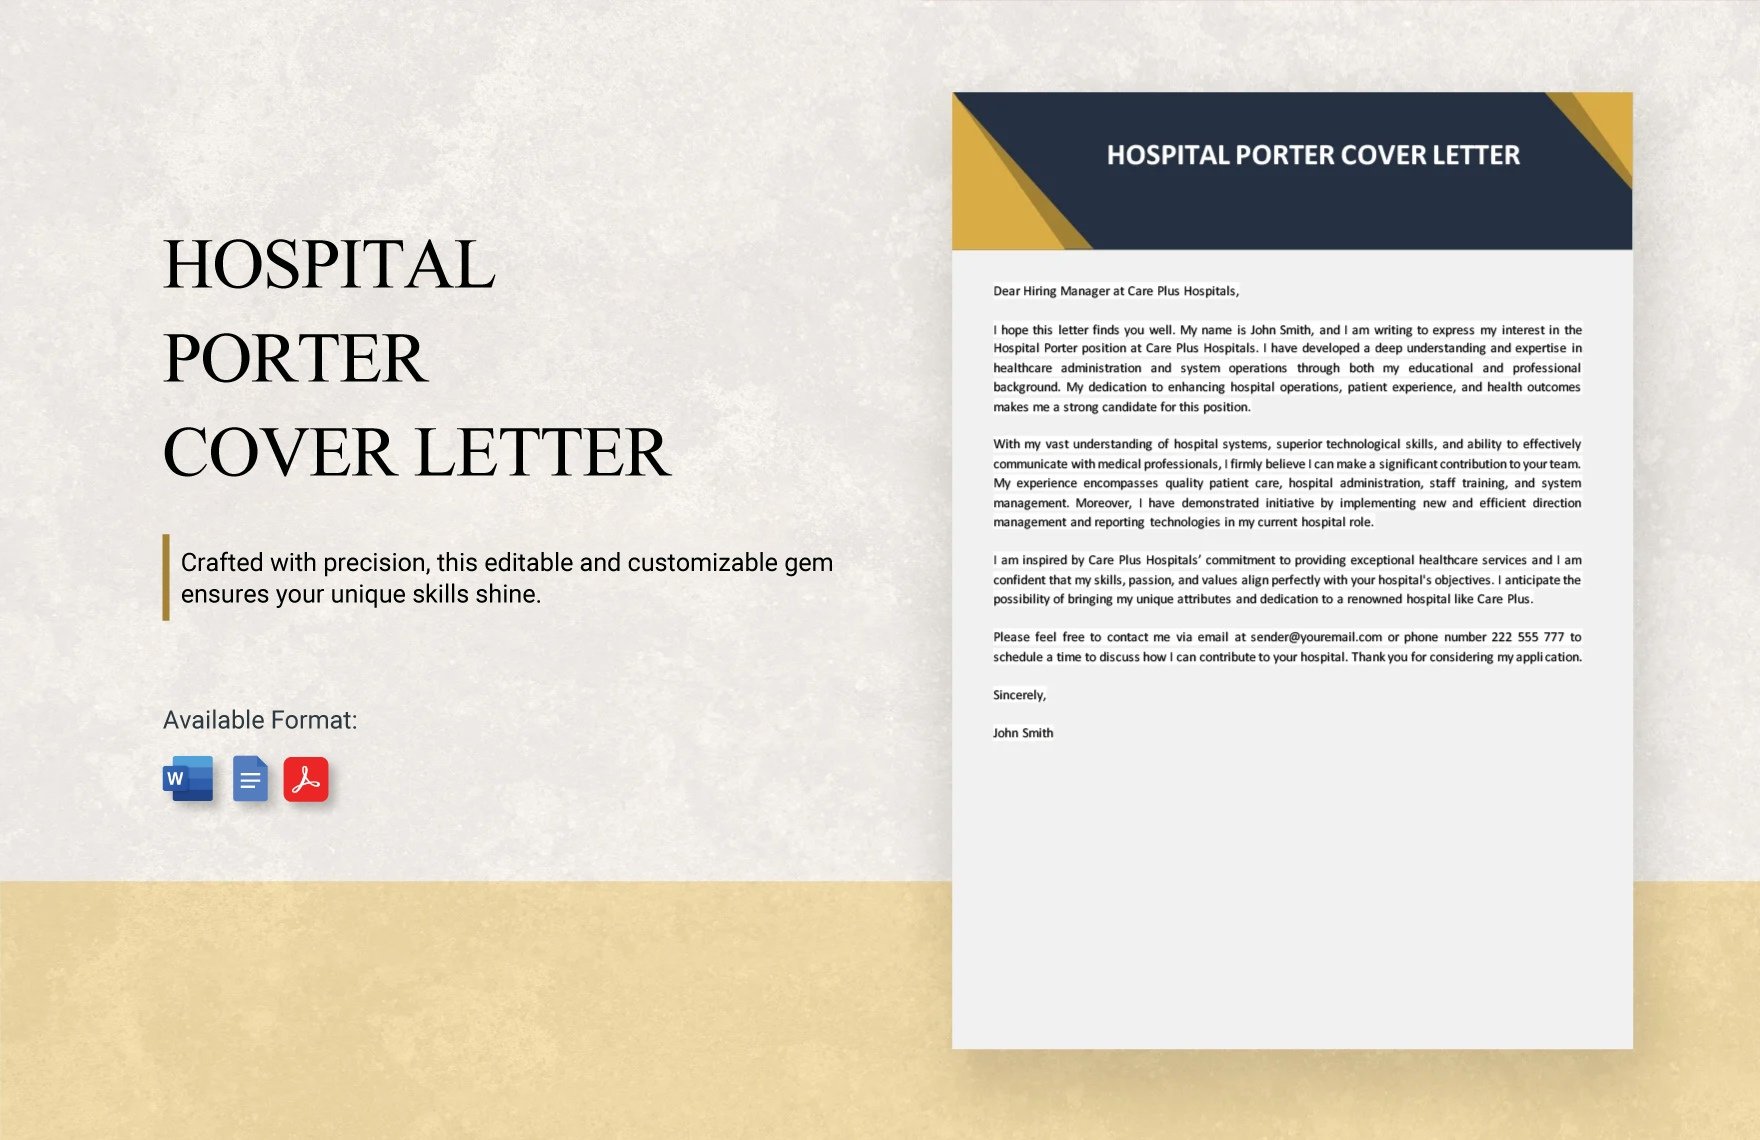 Hospital Porter Cover Letter in Word, Google Docs, PDF